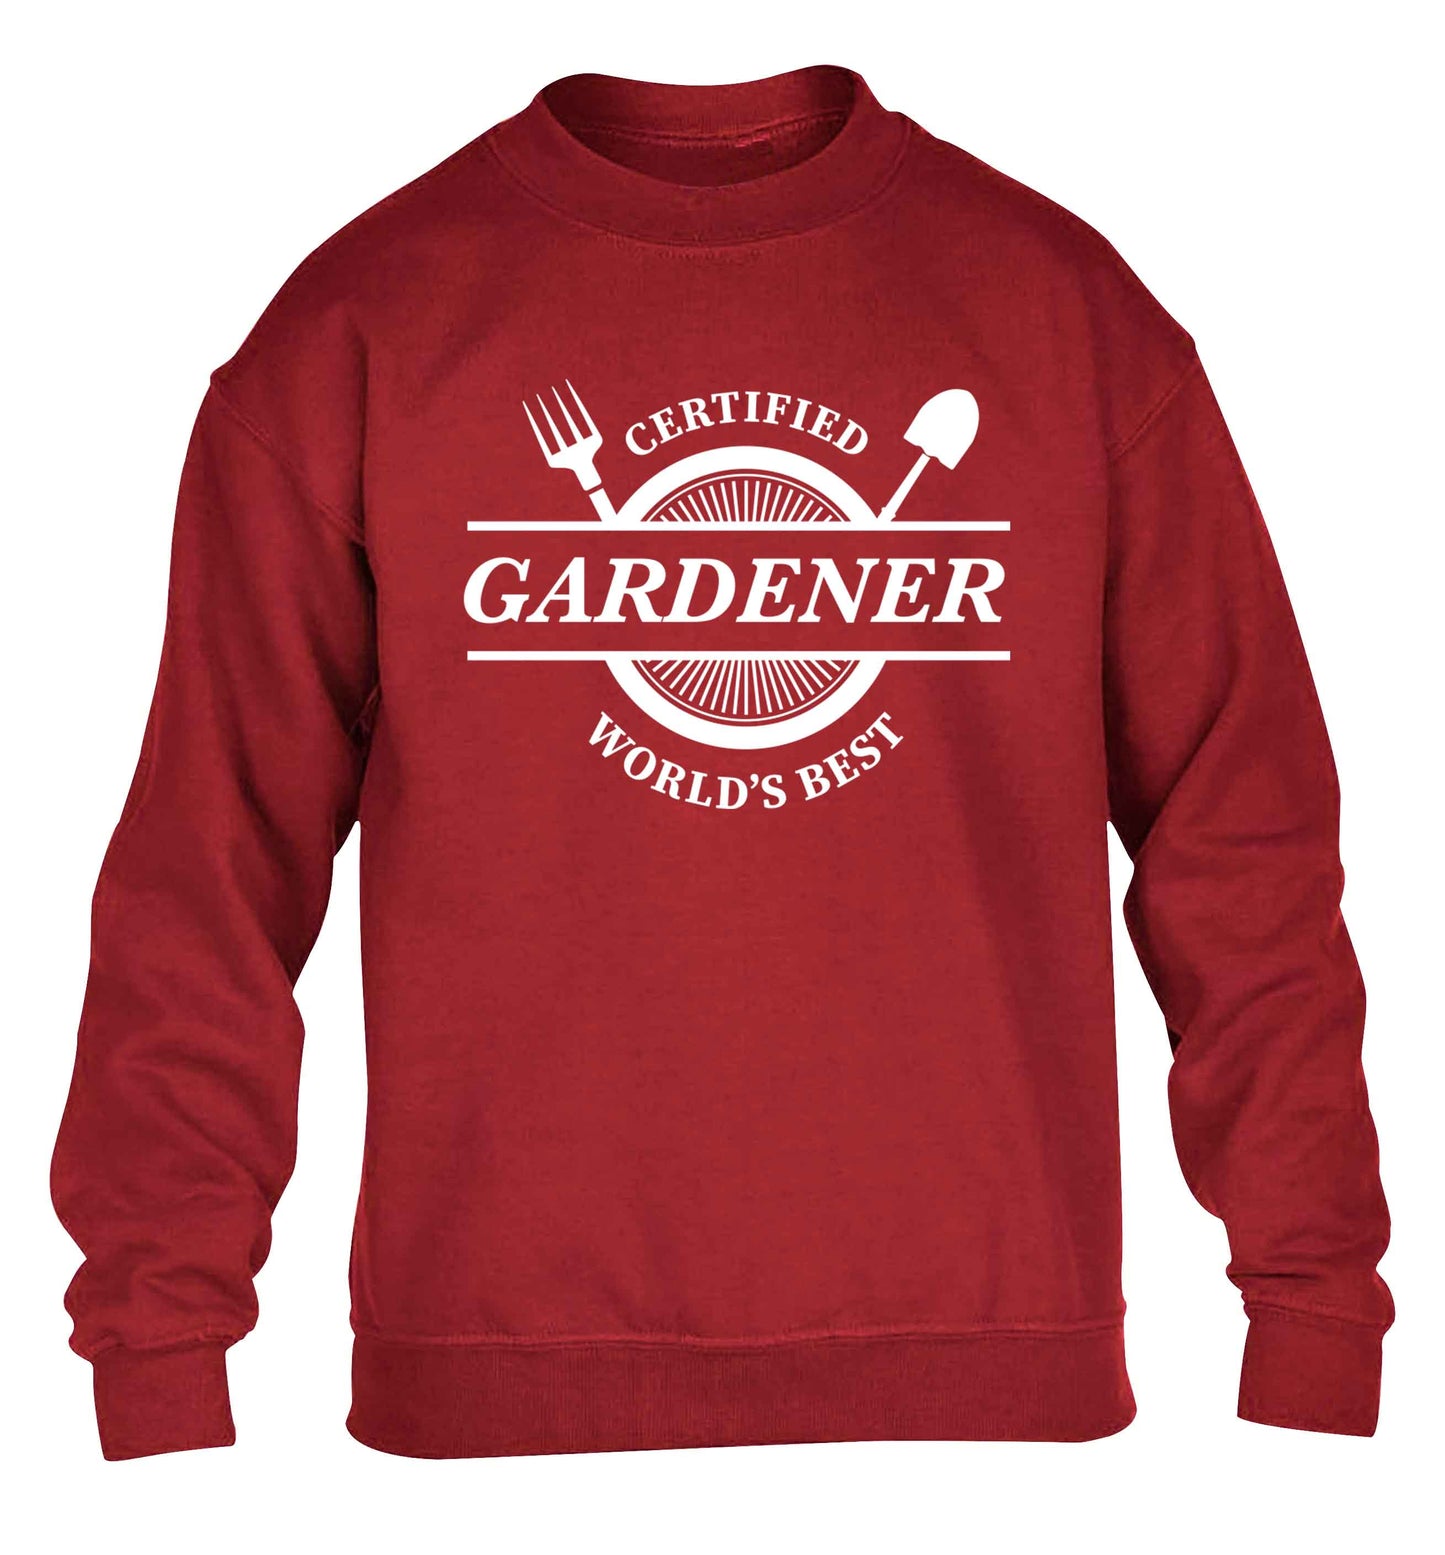 Certified gardener worlds best children's grey sweater 12-13 Years